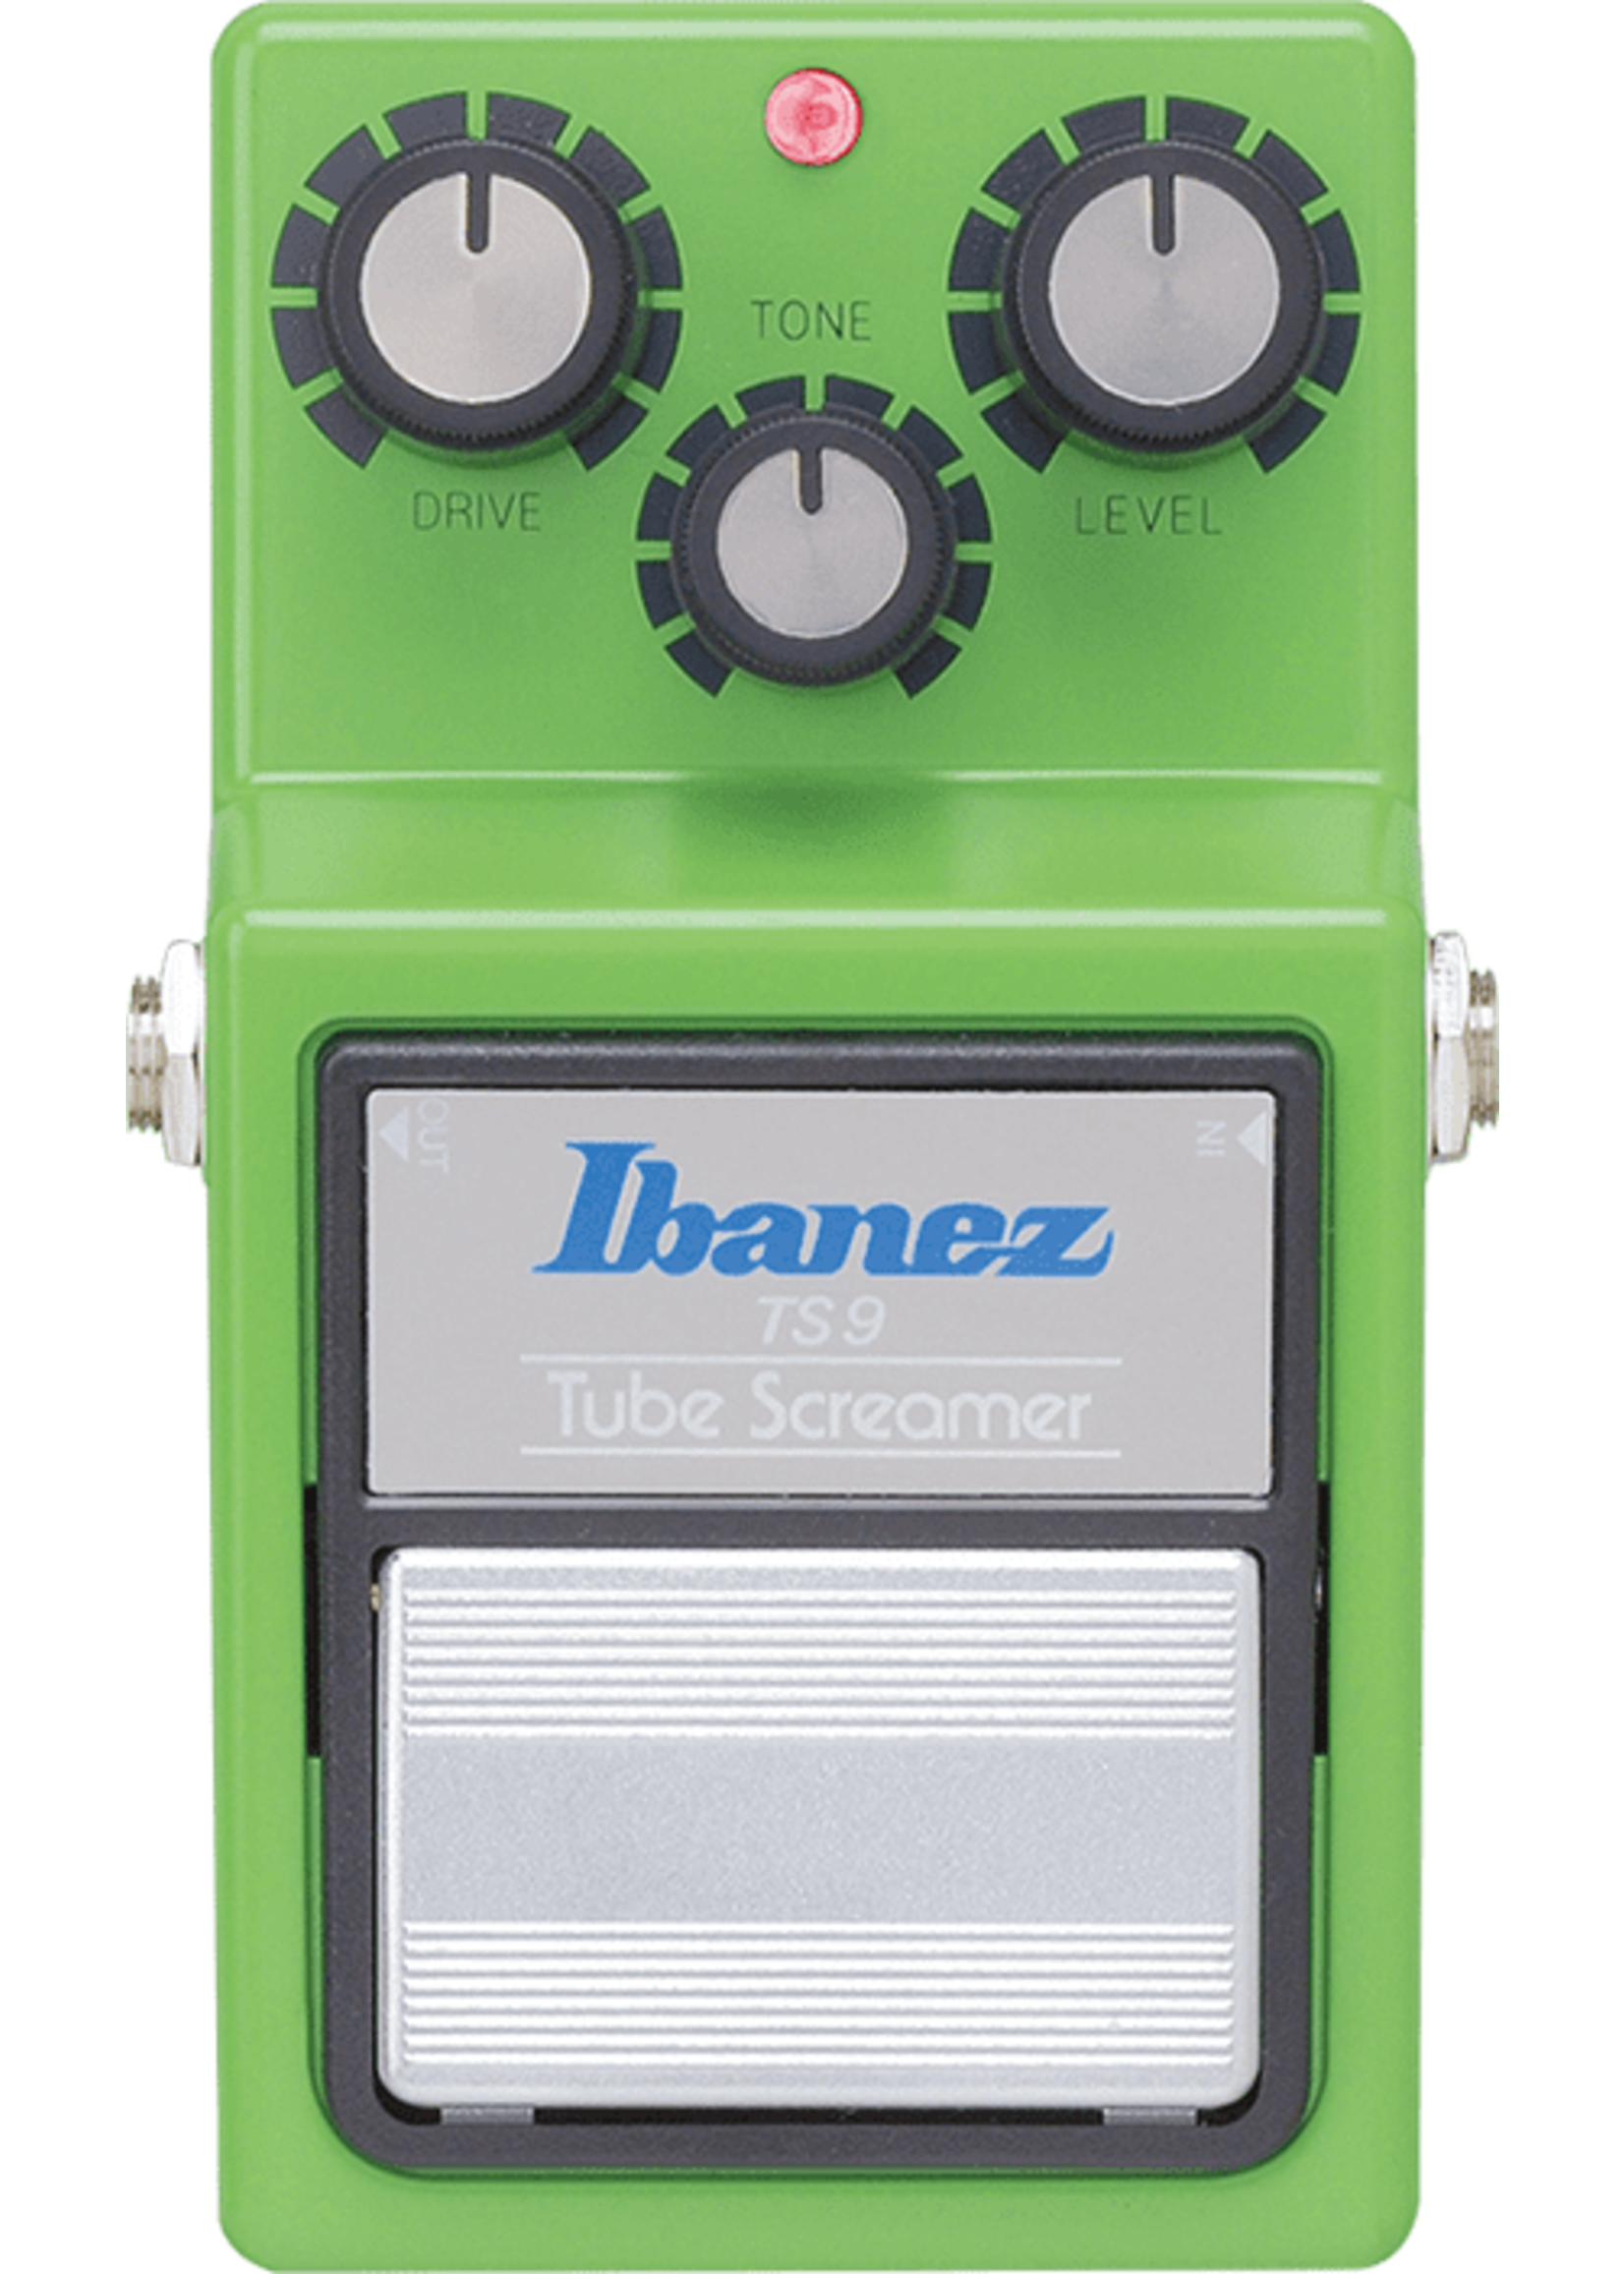 Ibanez Ibanez TS9 Tube Screamer Overdrive Pedal